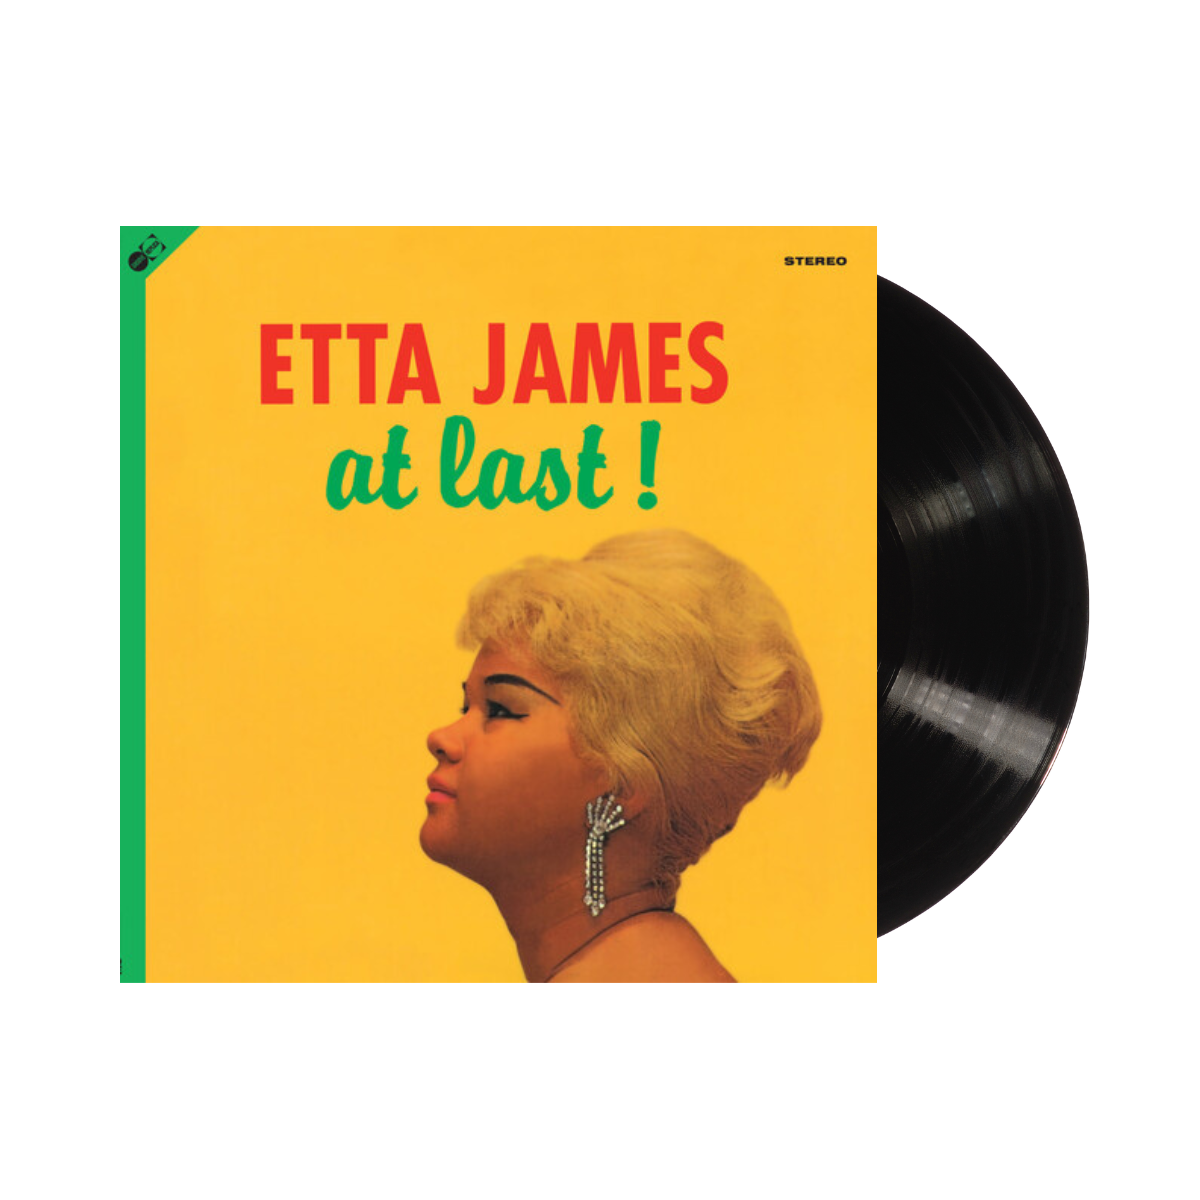 Etta James - At Last!